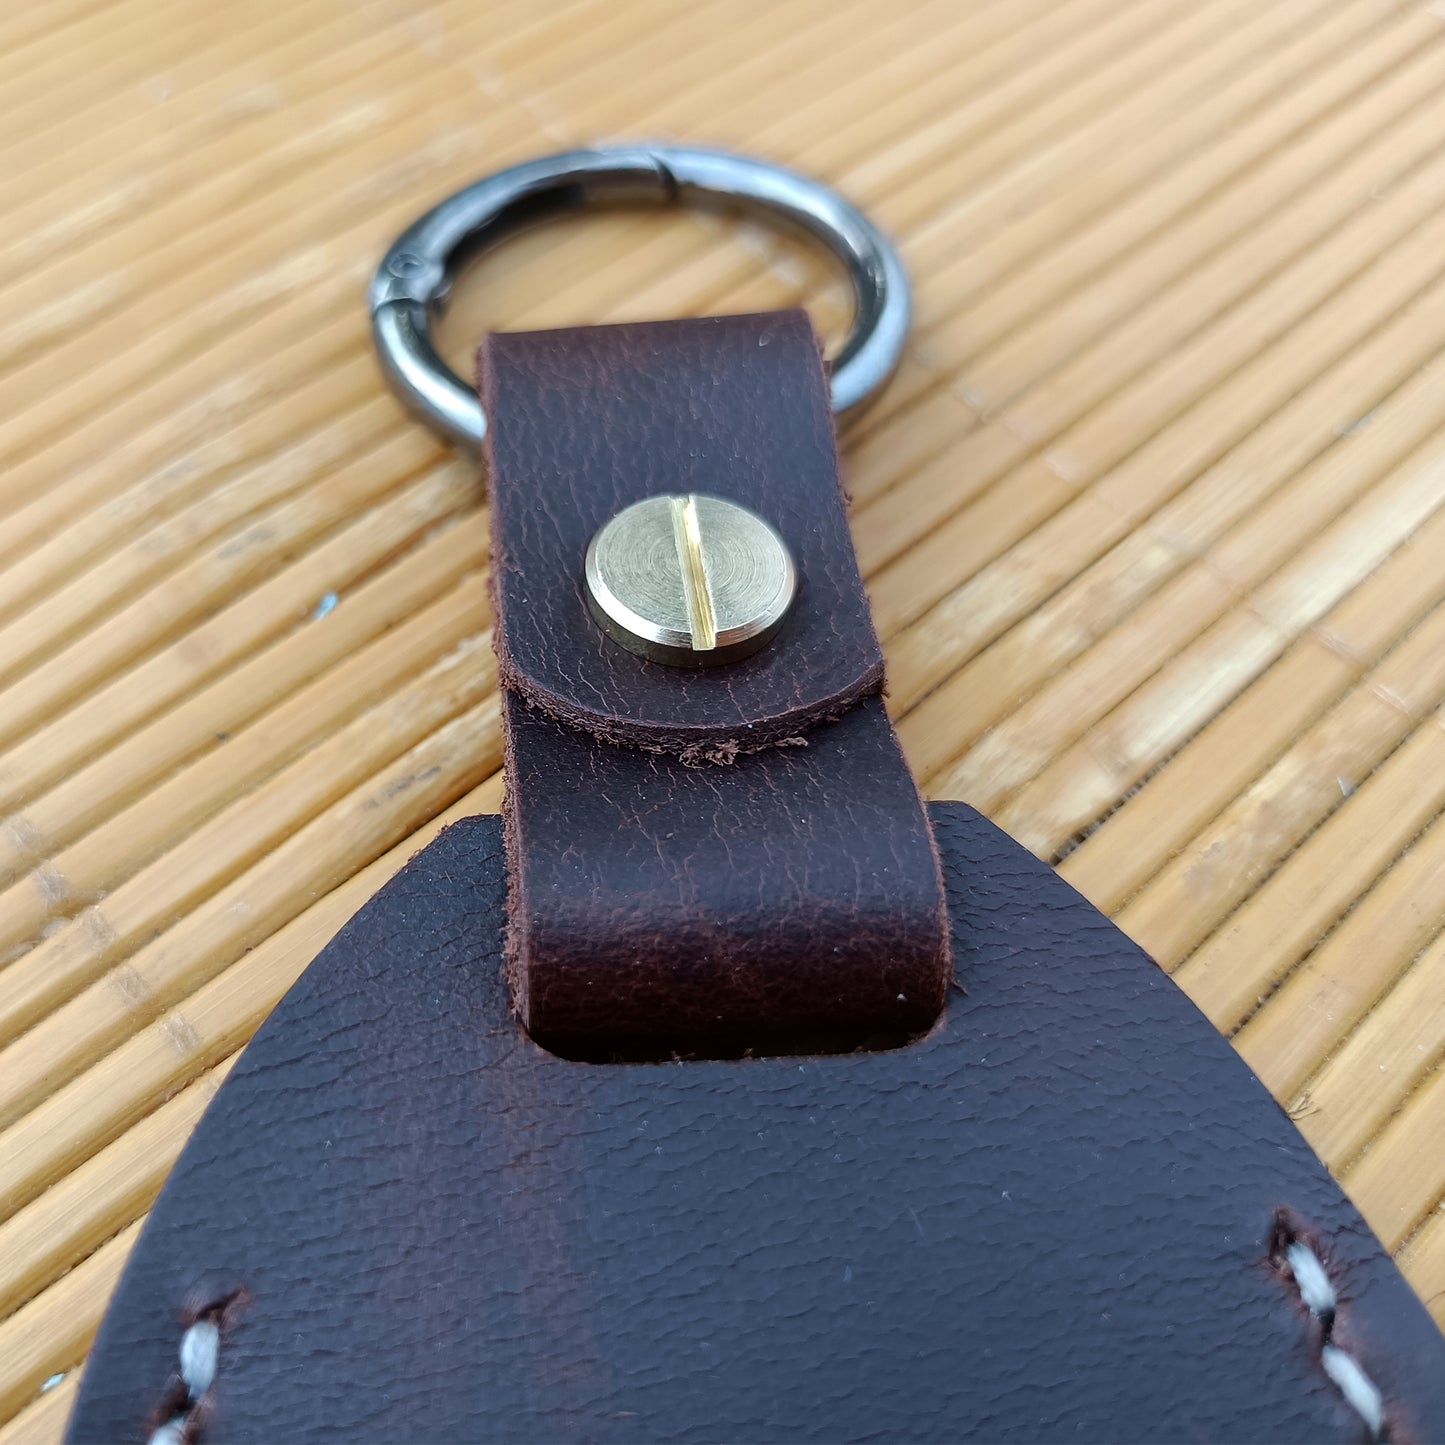 Handmade Key sleeve key fob case Key chain Leather Protective Key Holder Large Capacity Protective Case